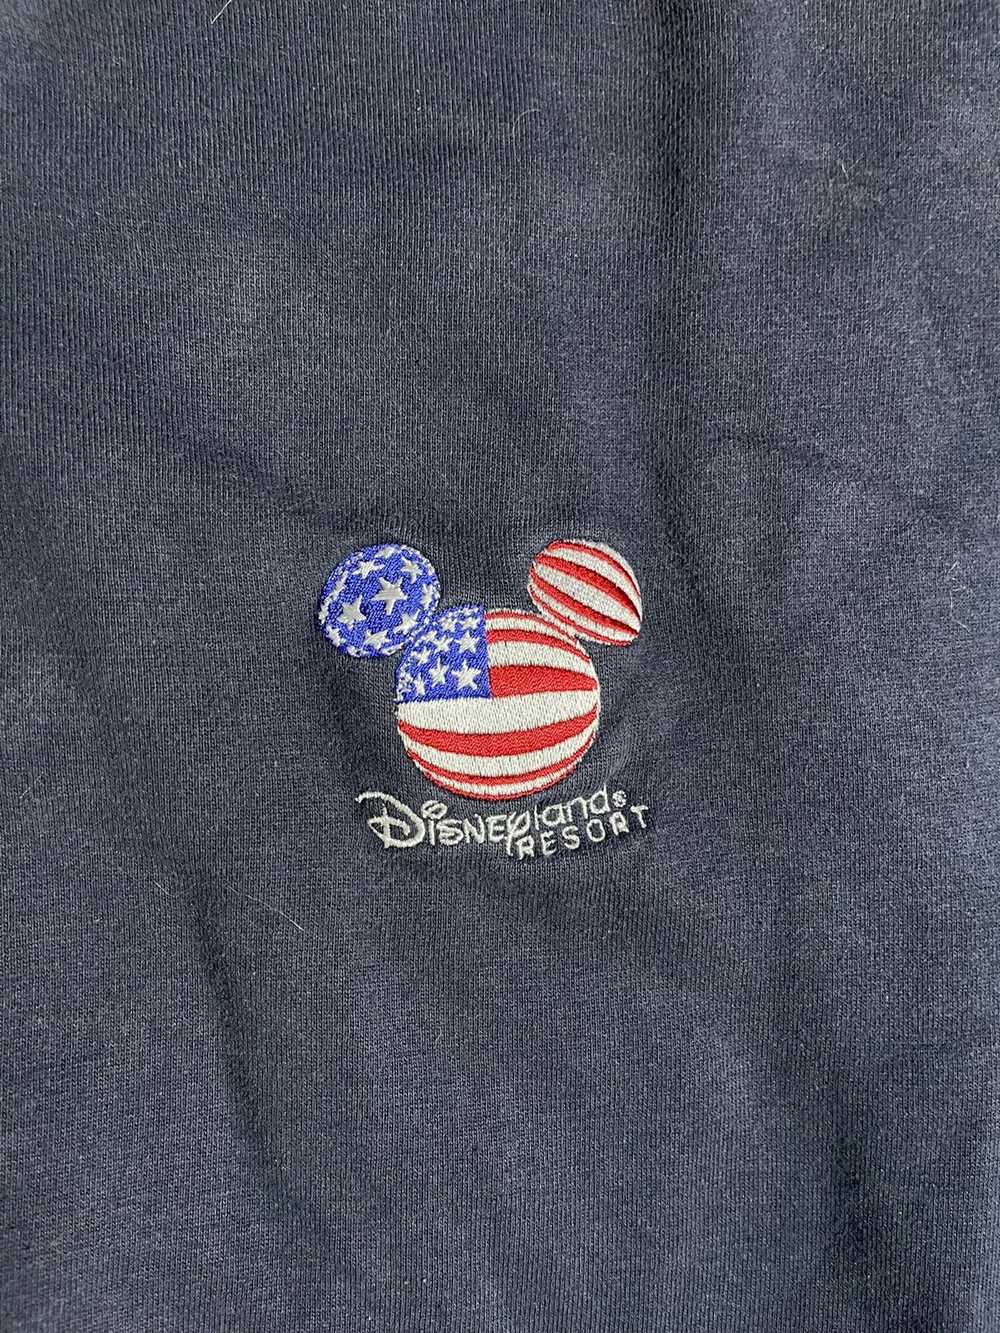 Disney Disneyland Resort Jacket - image 2